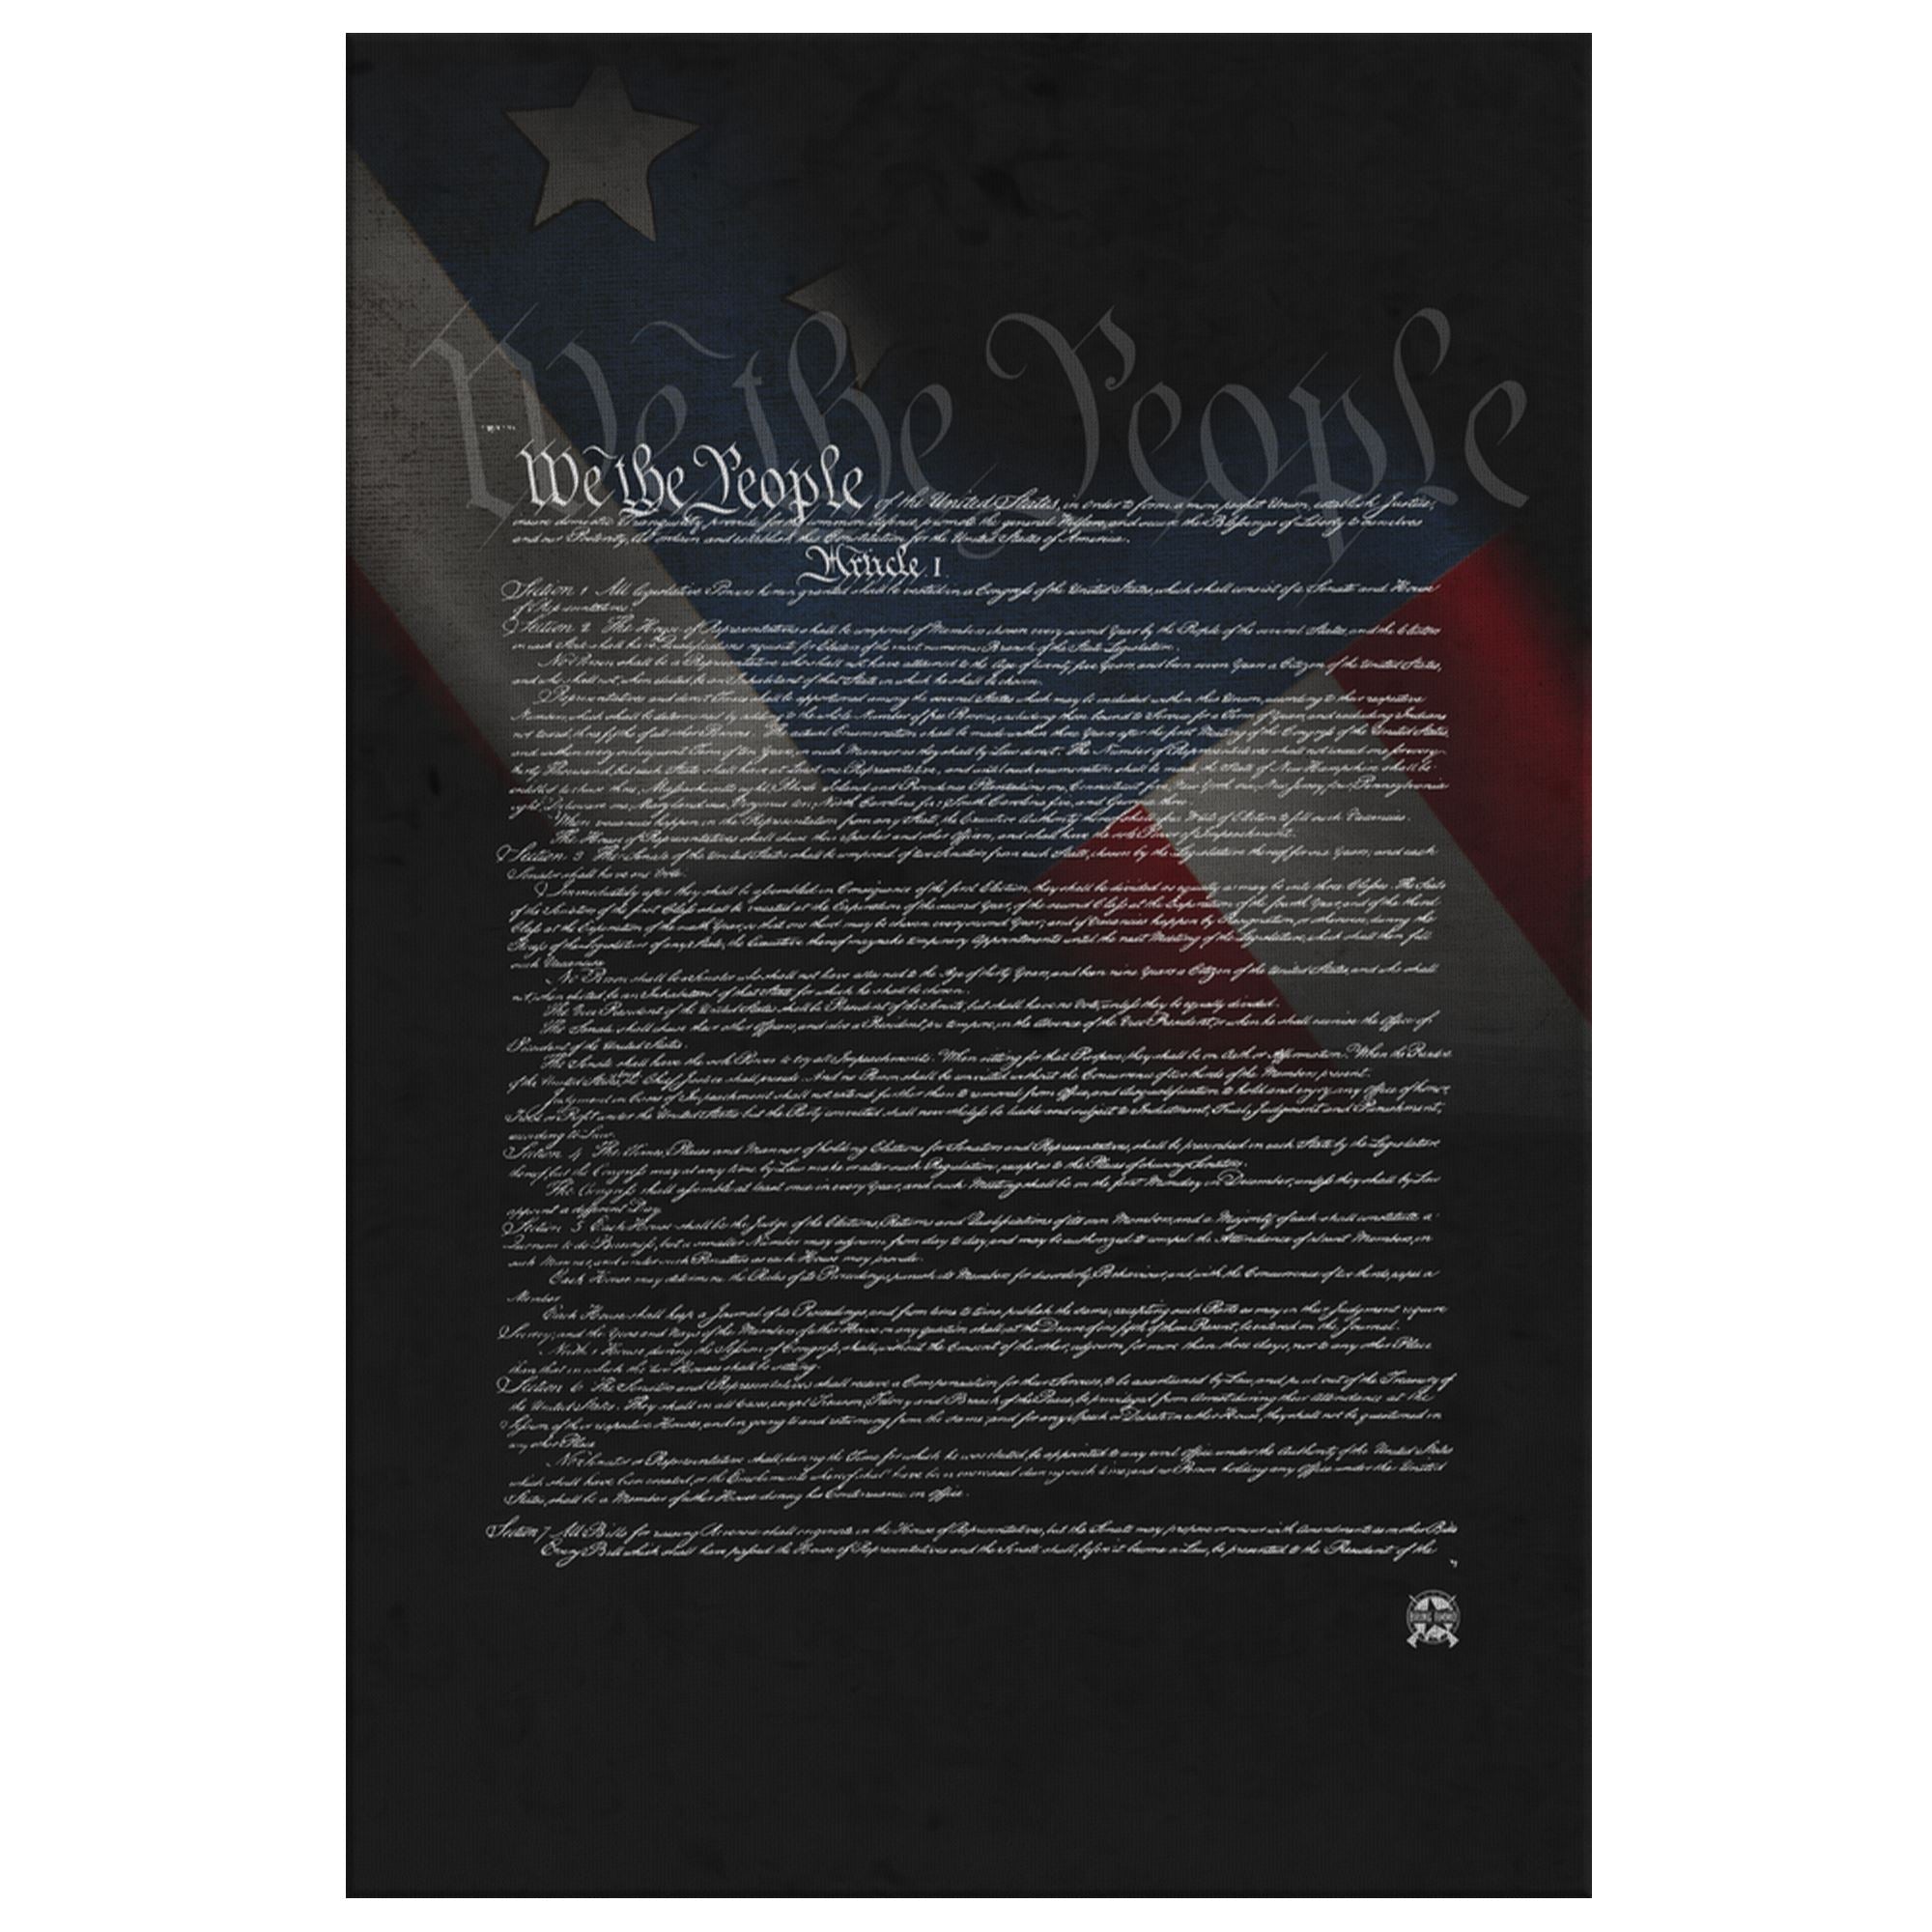 U.S. Constitution Black Edition Premium Canvas Print Canvas Wall Art 2 